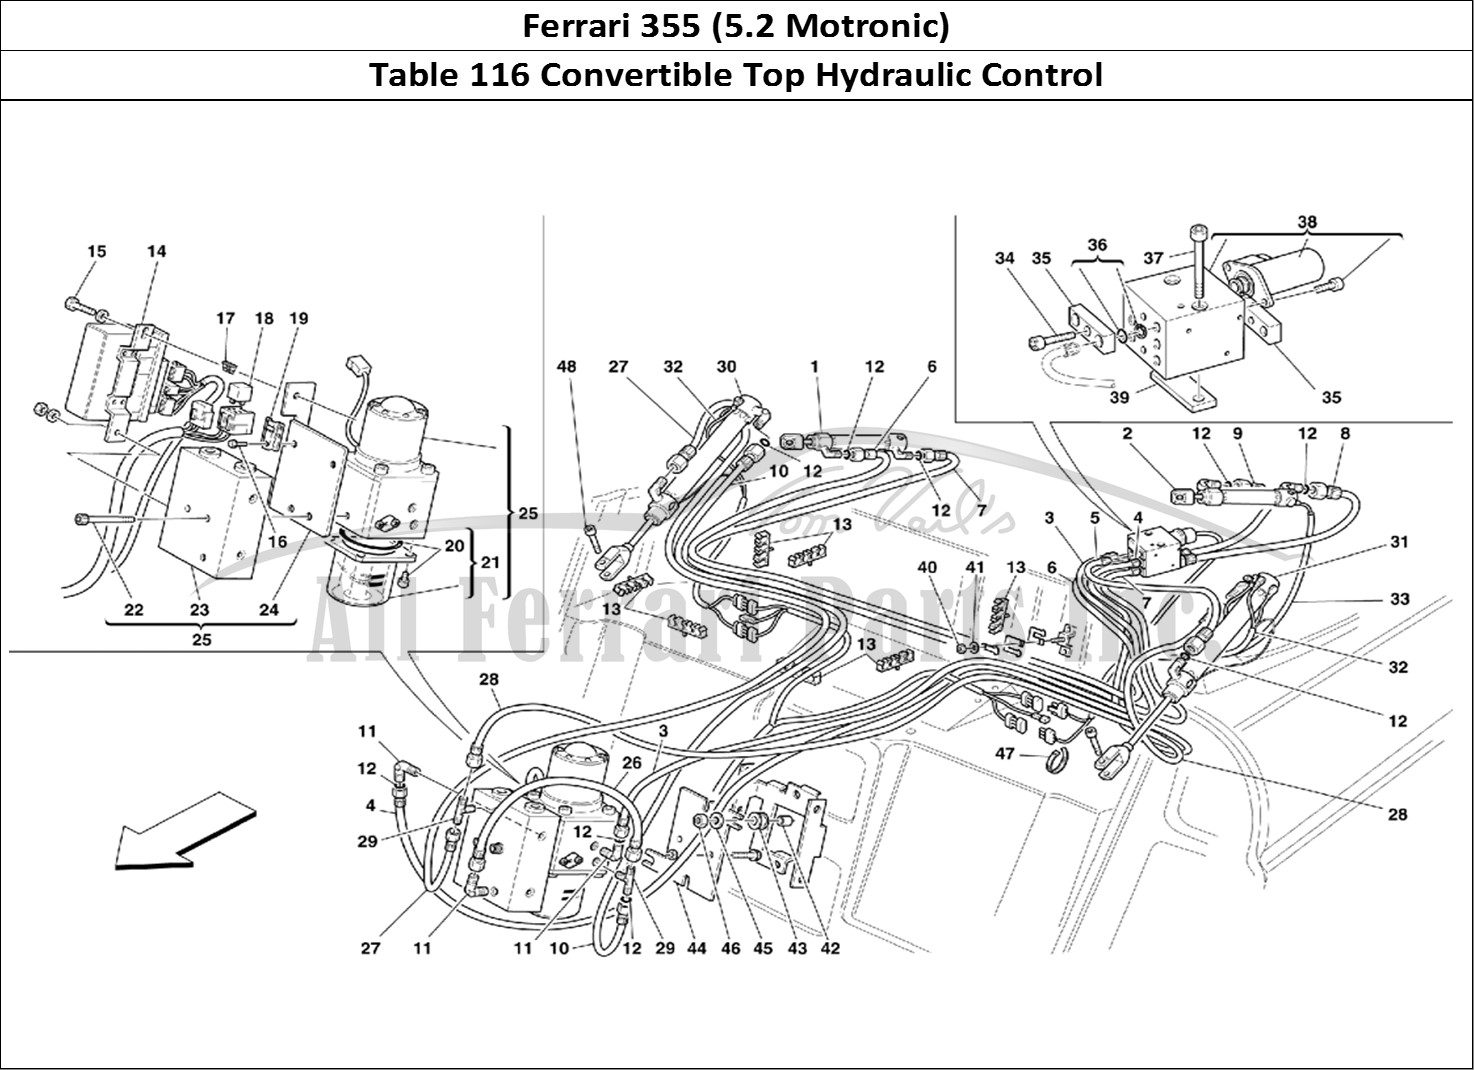 Ferrari Parts Ferrari 355 (5.2 Motronic) Page 116 Top Hydraulic Control -Va